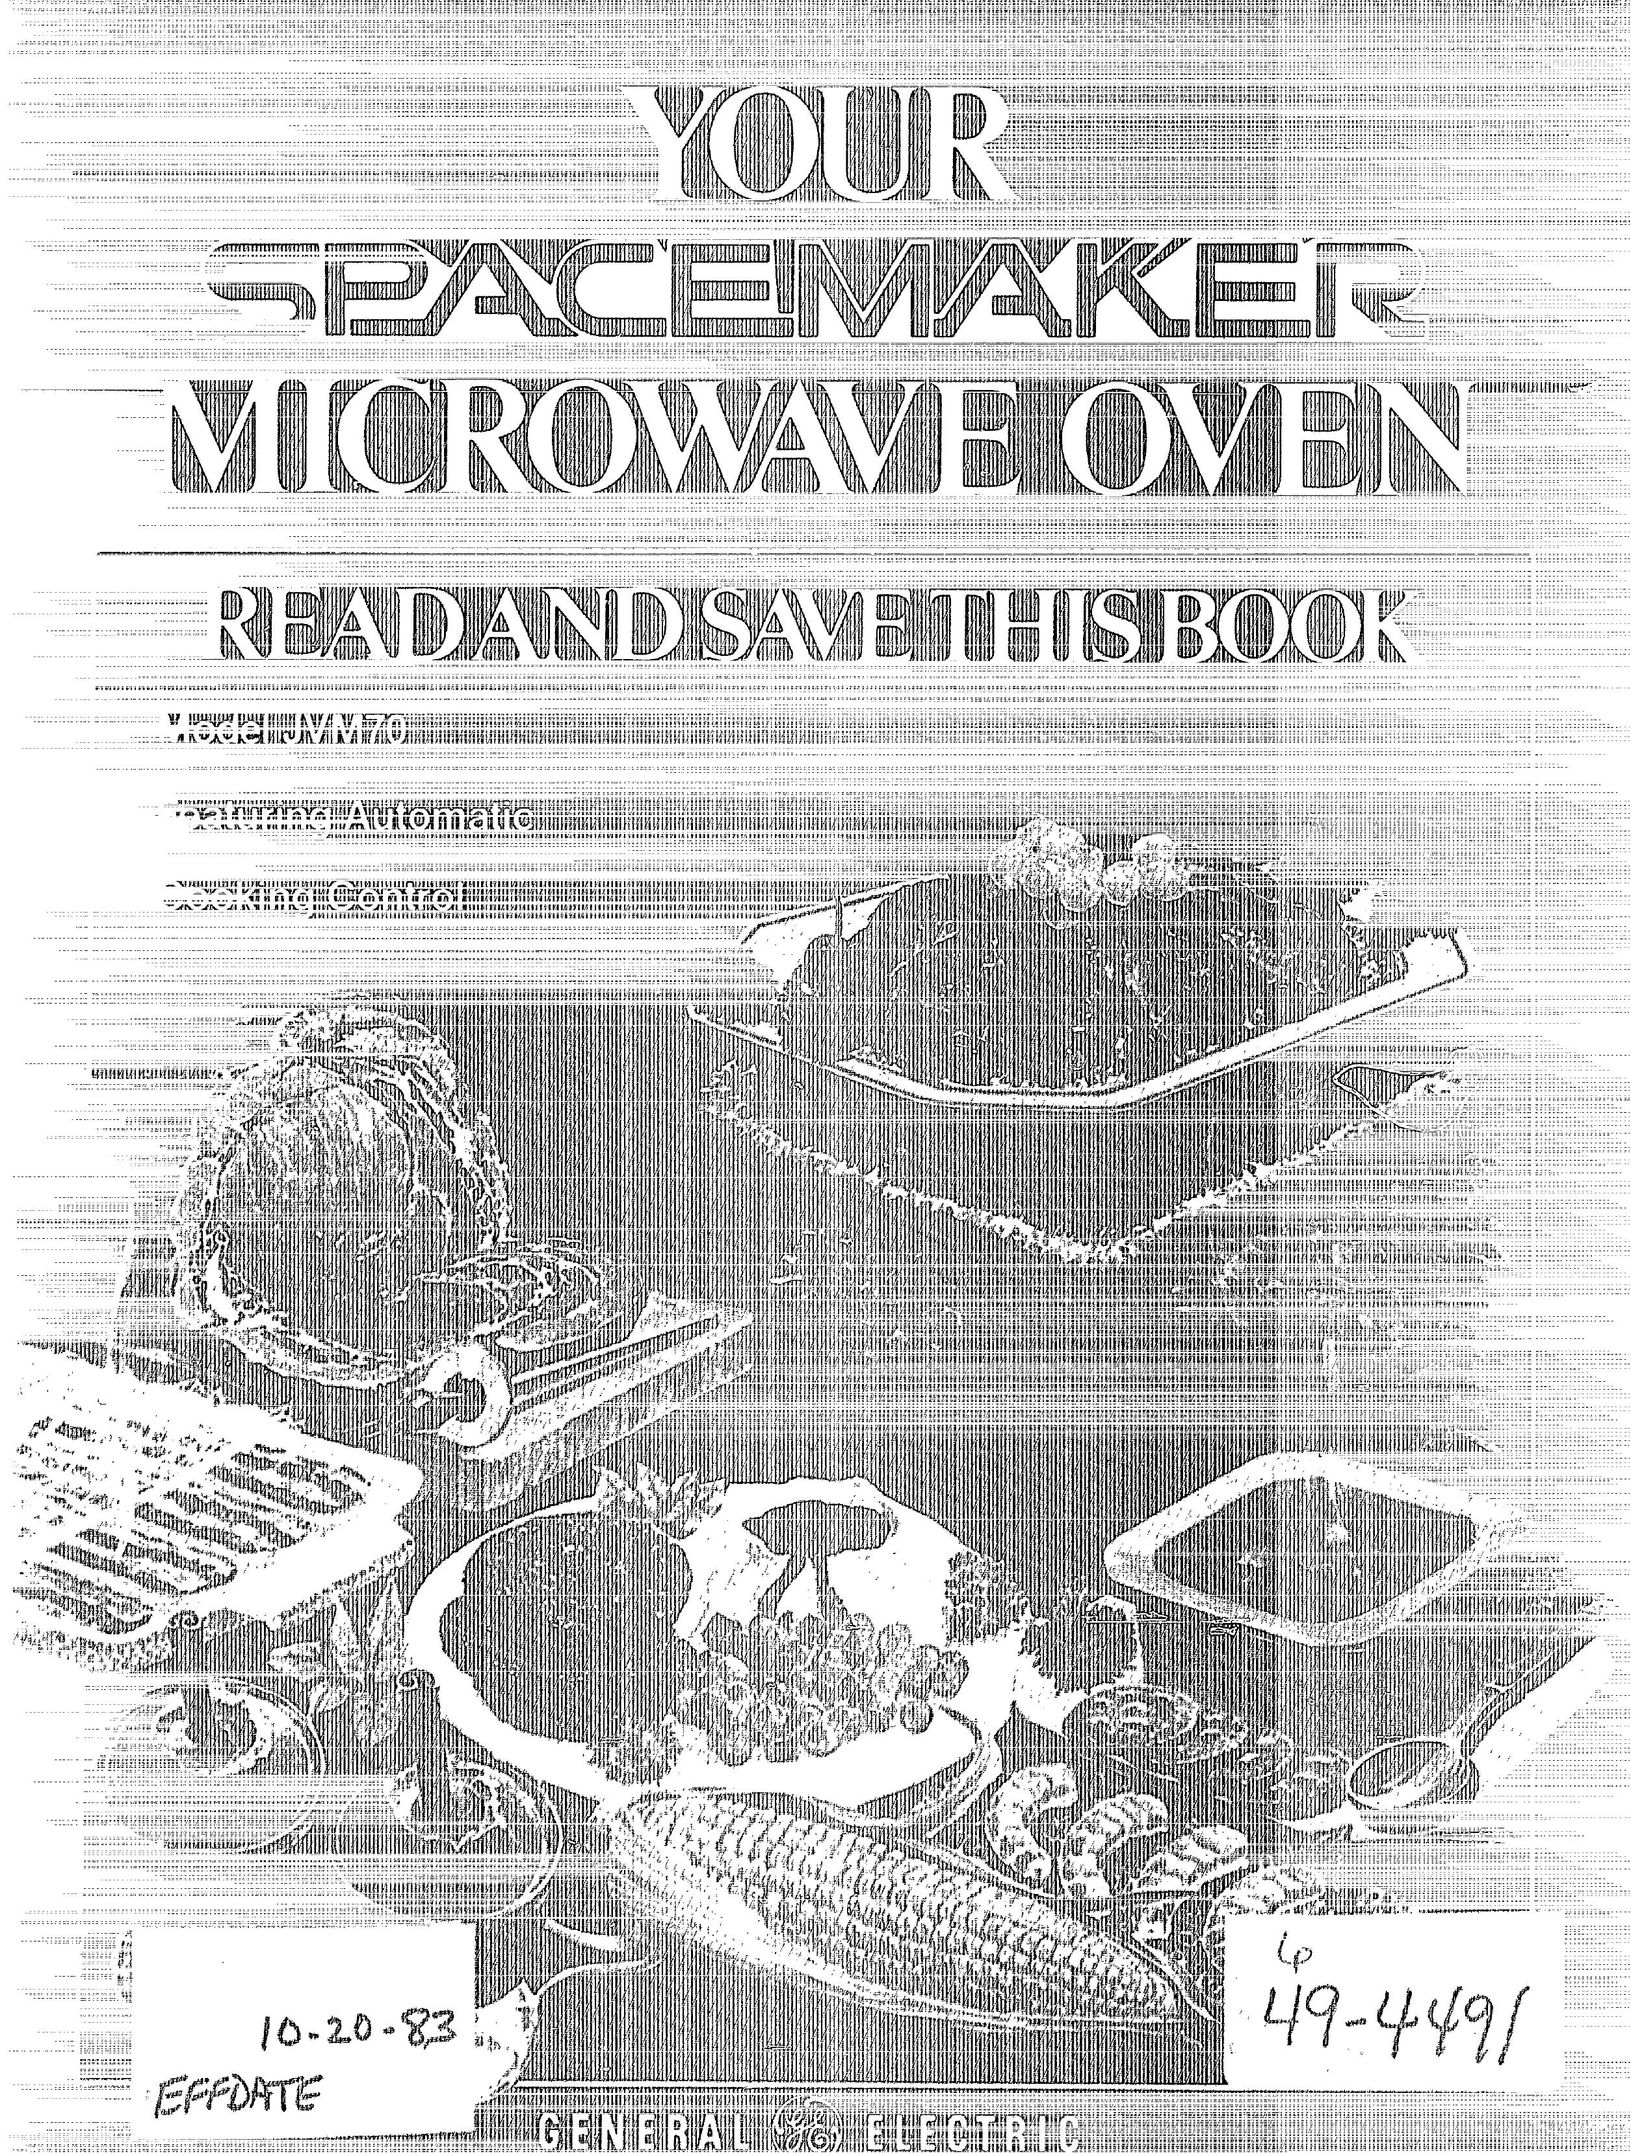 GE 49-4491 Microwave Oven User Manual